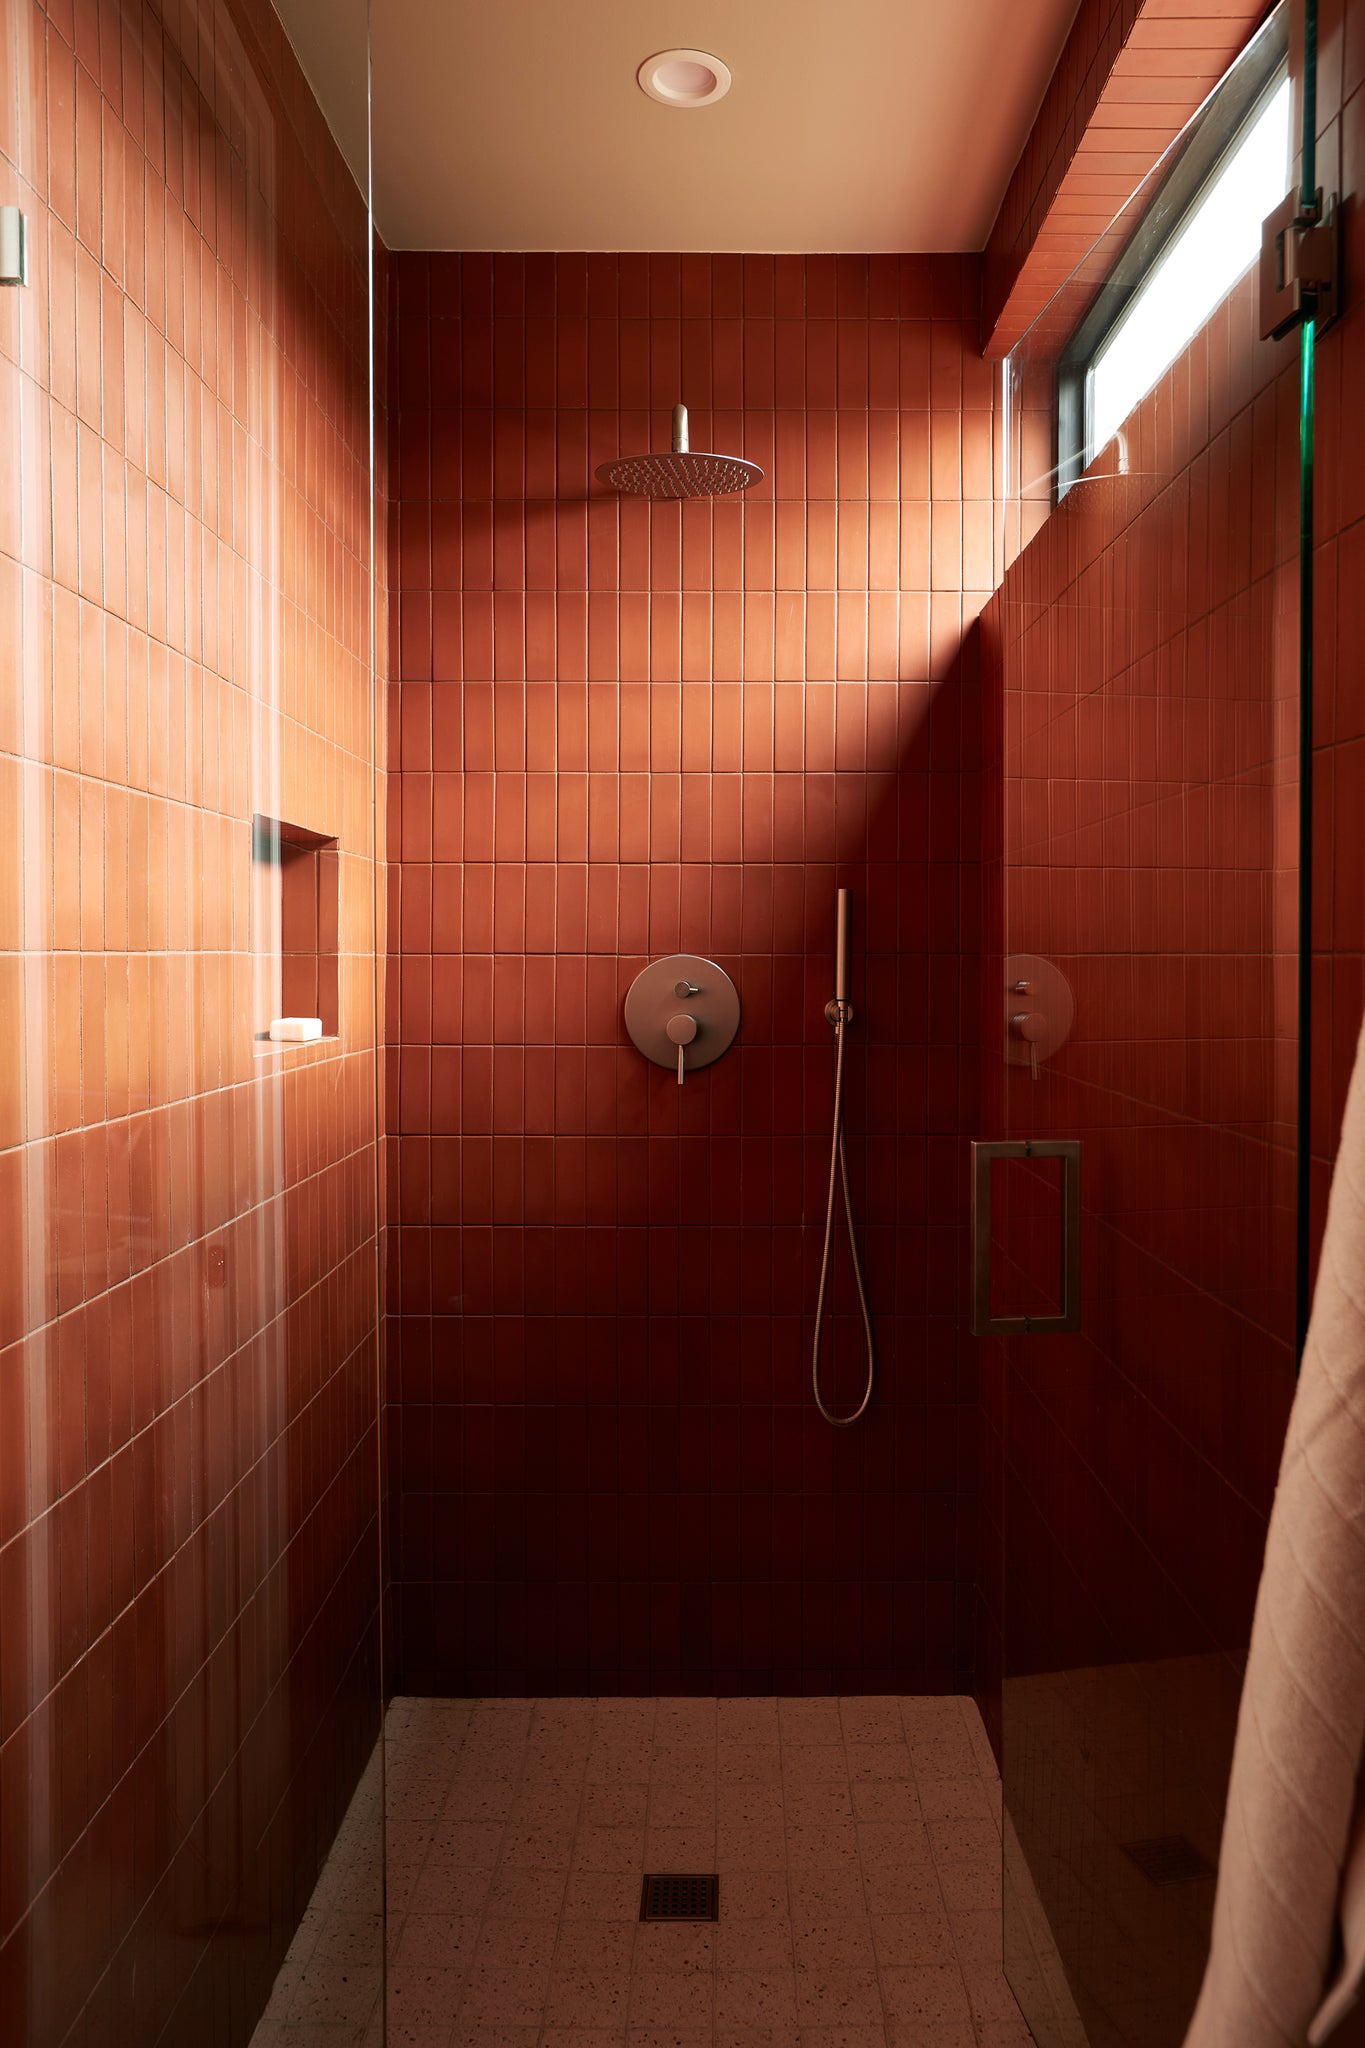 Modern bathroom design with clay tiles